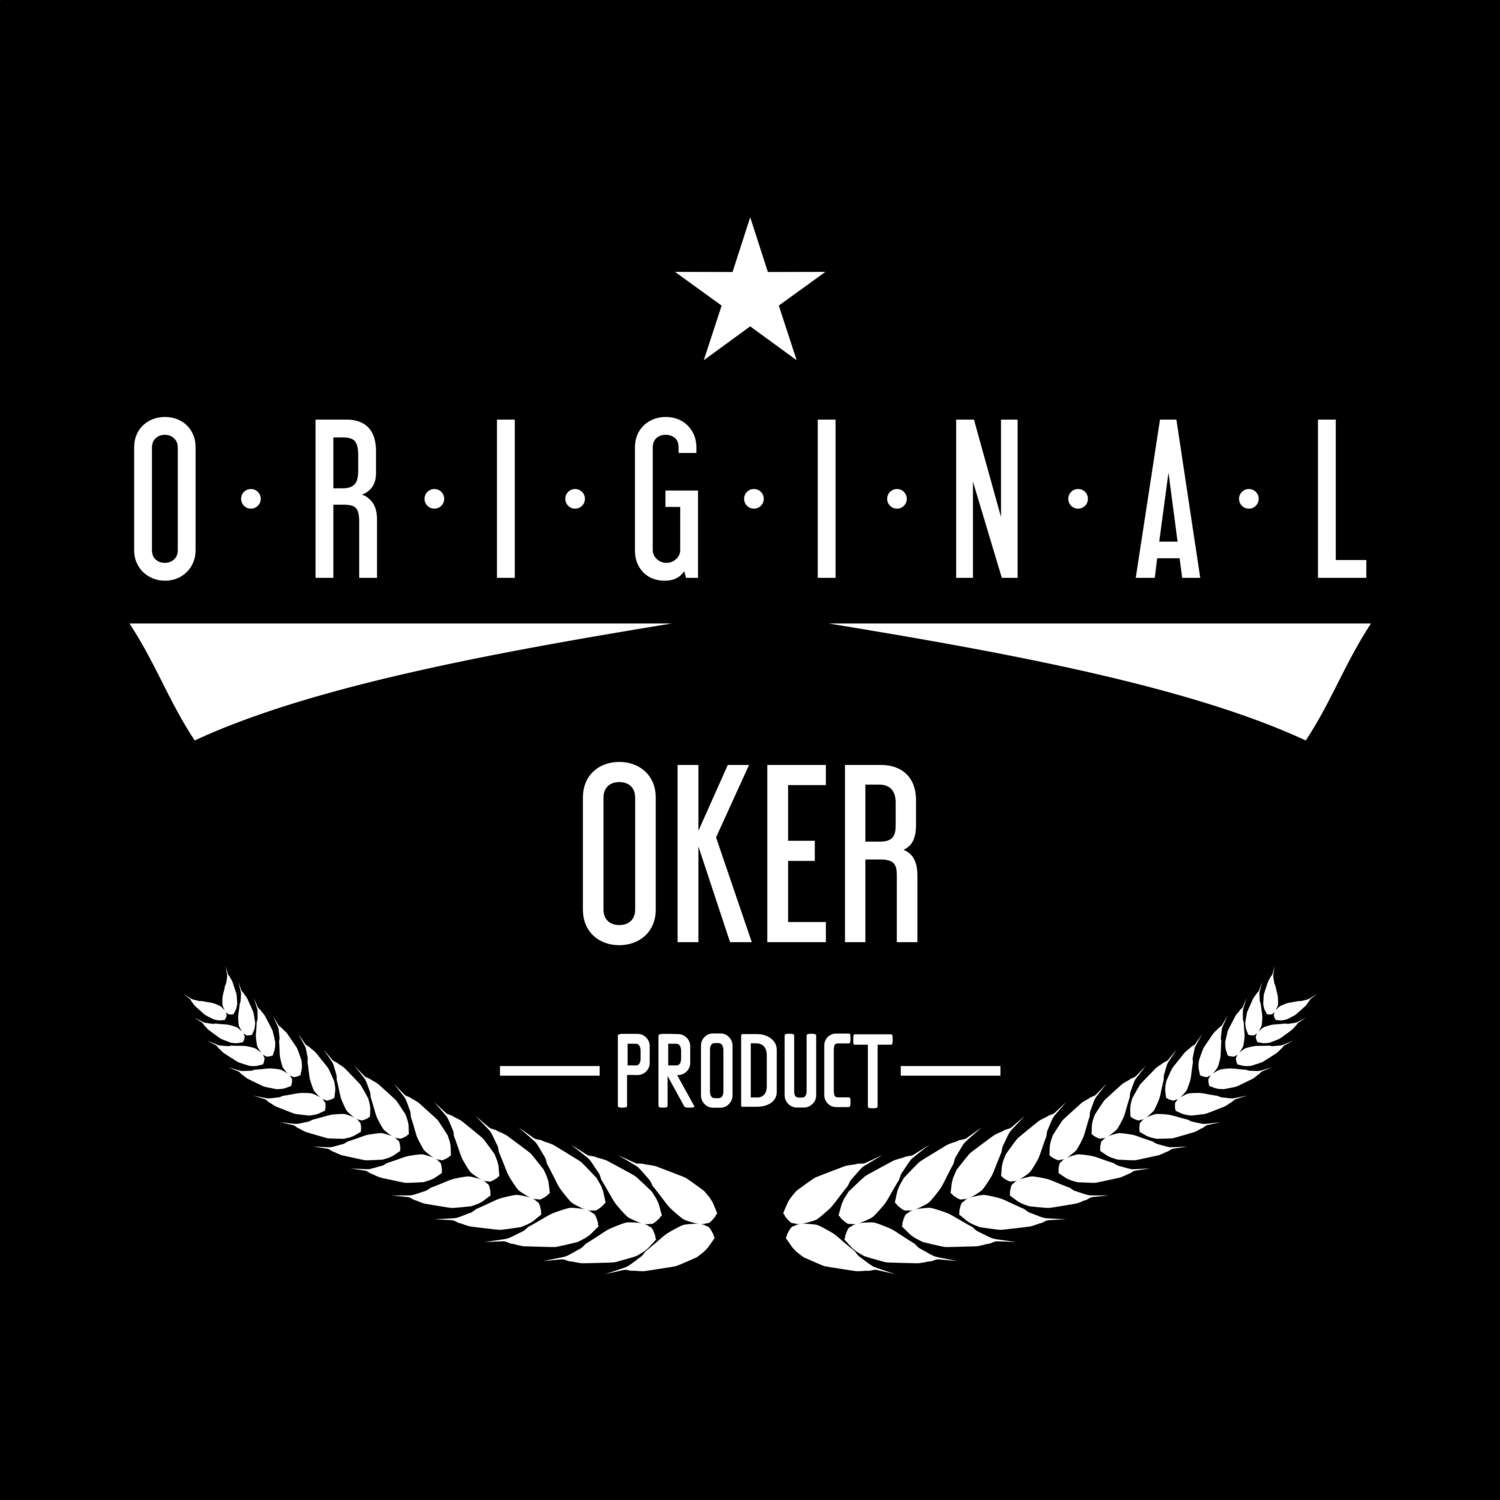 Oker T-Shirt »Original Product«